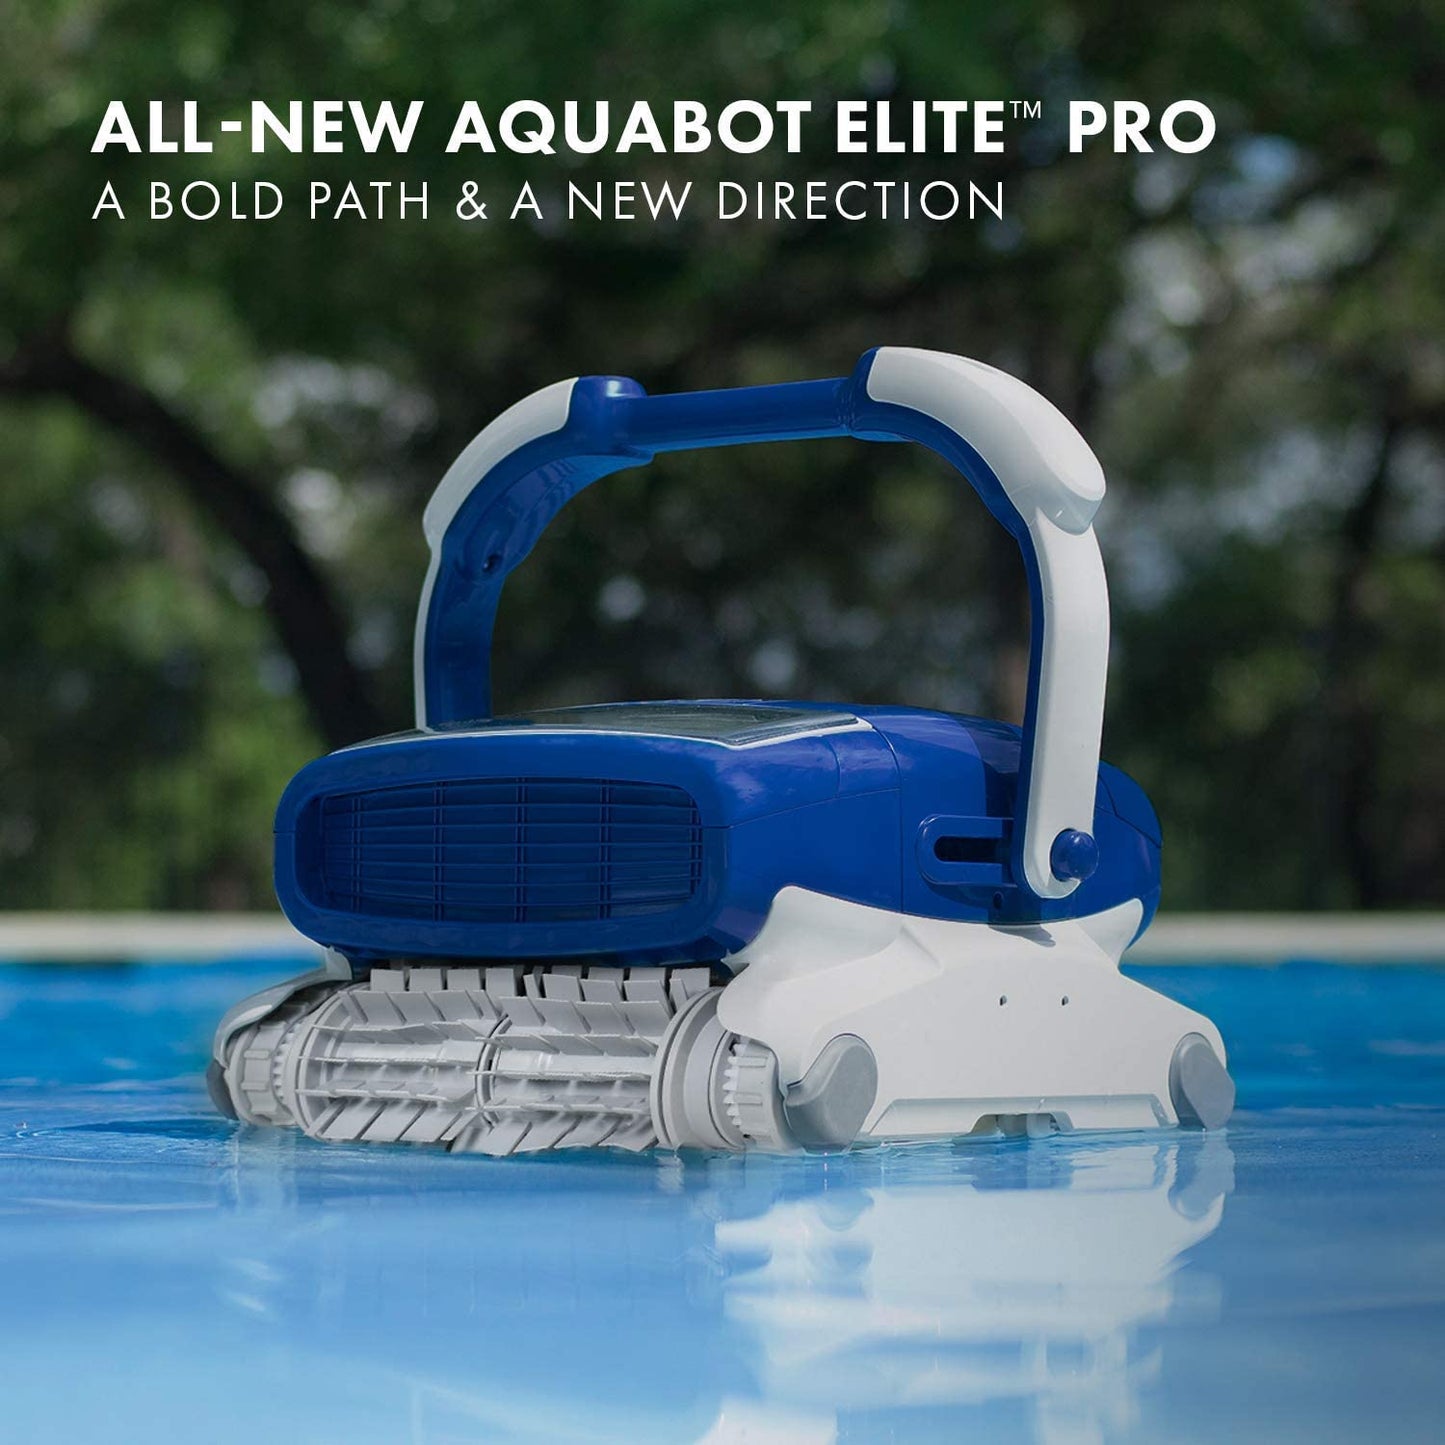 Aquabot Elite Pro